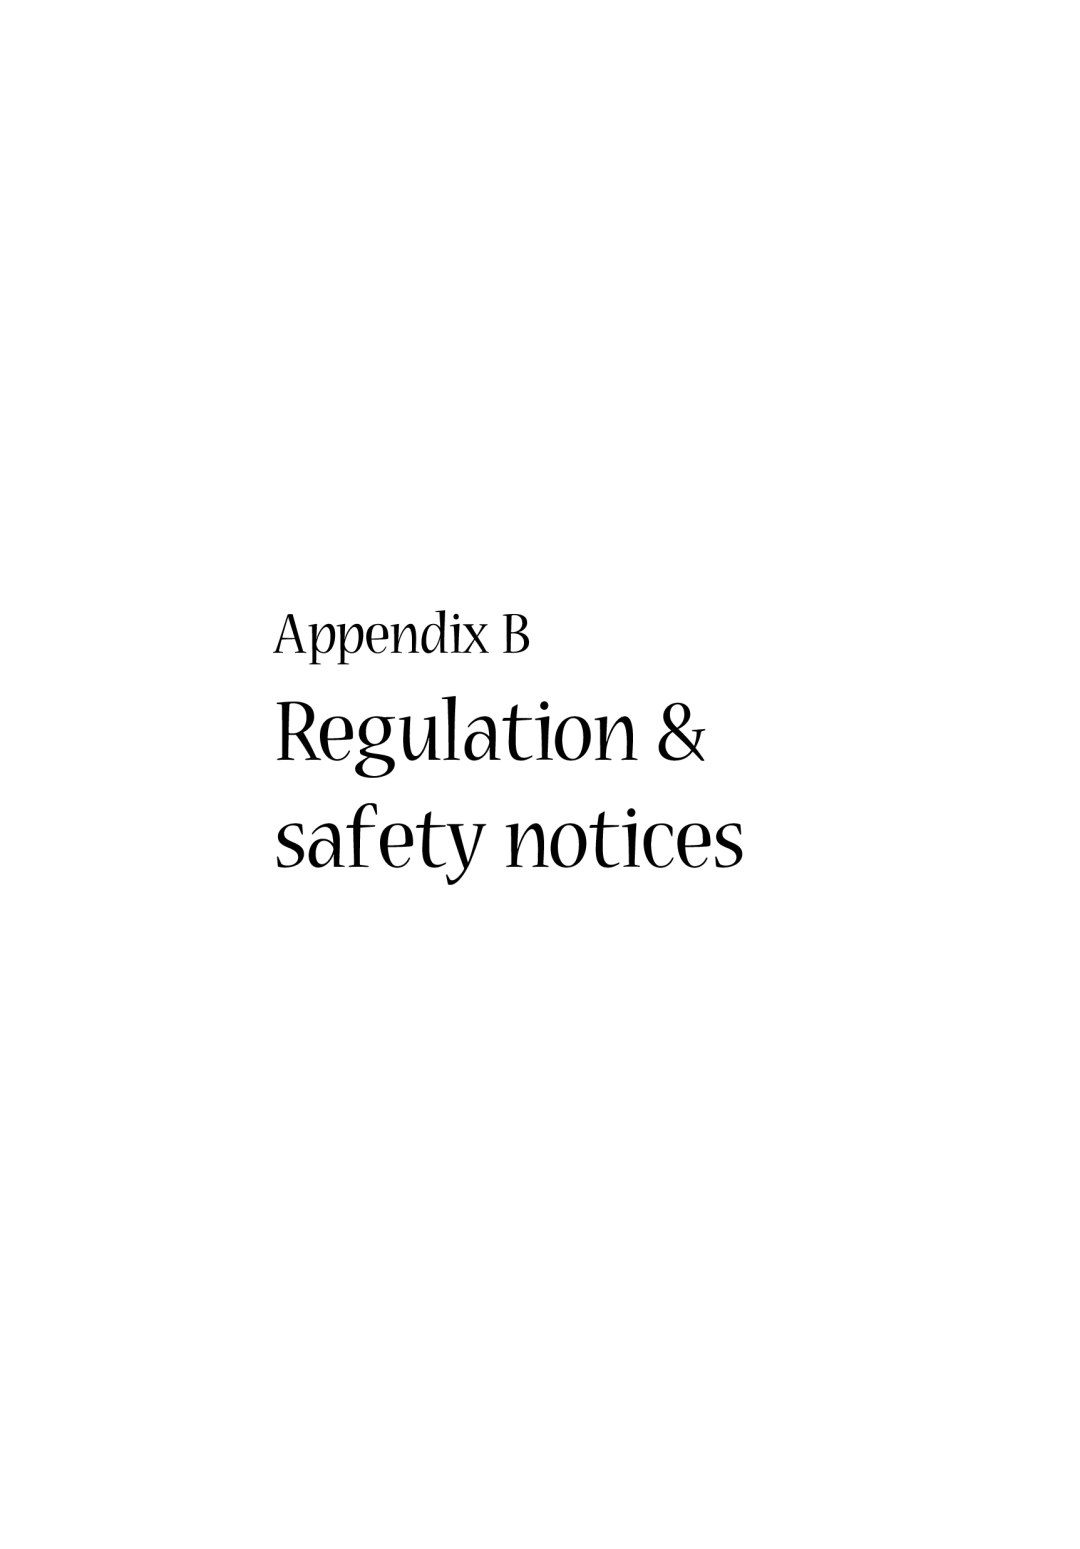 Acer 1360 manual Appendix B, Regulation & safety notices 